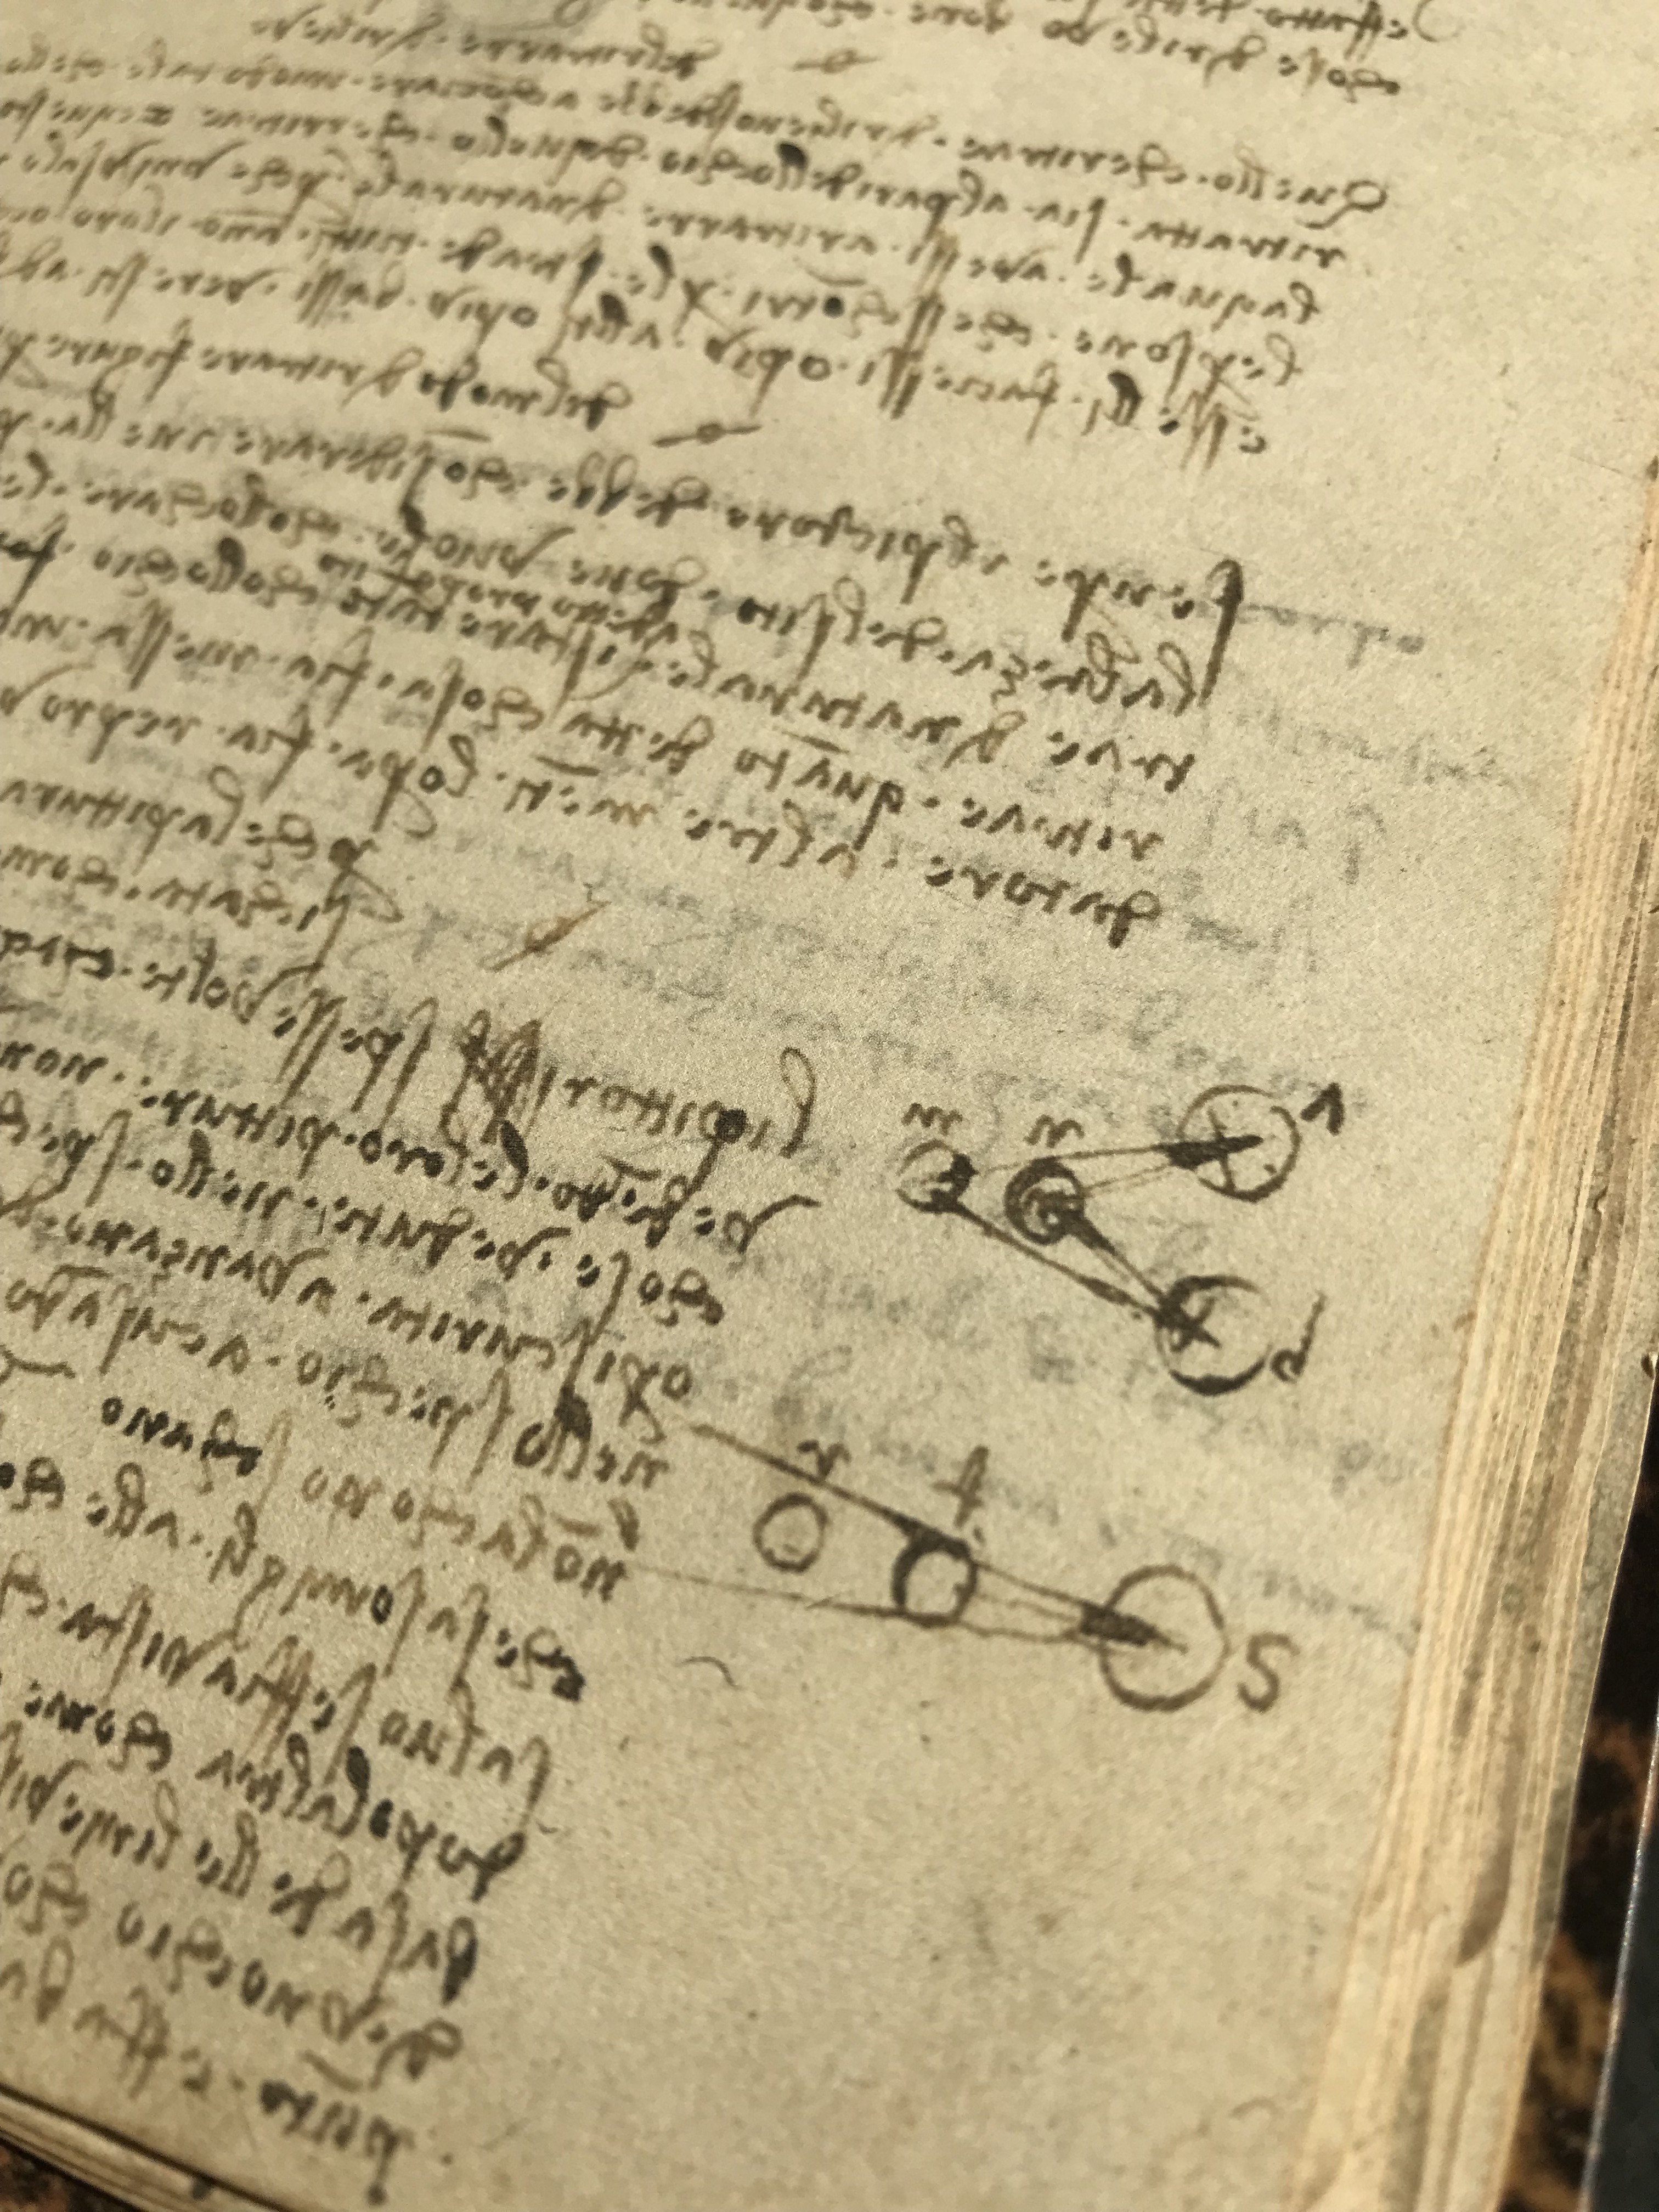 "Leonardo da Vinci's Manuscript A, fol. 90r"